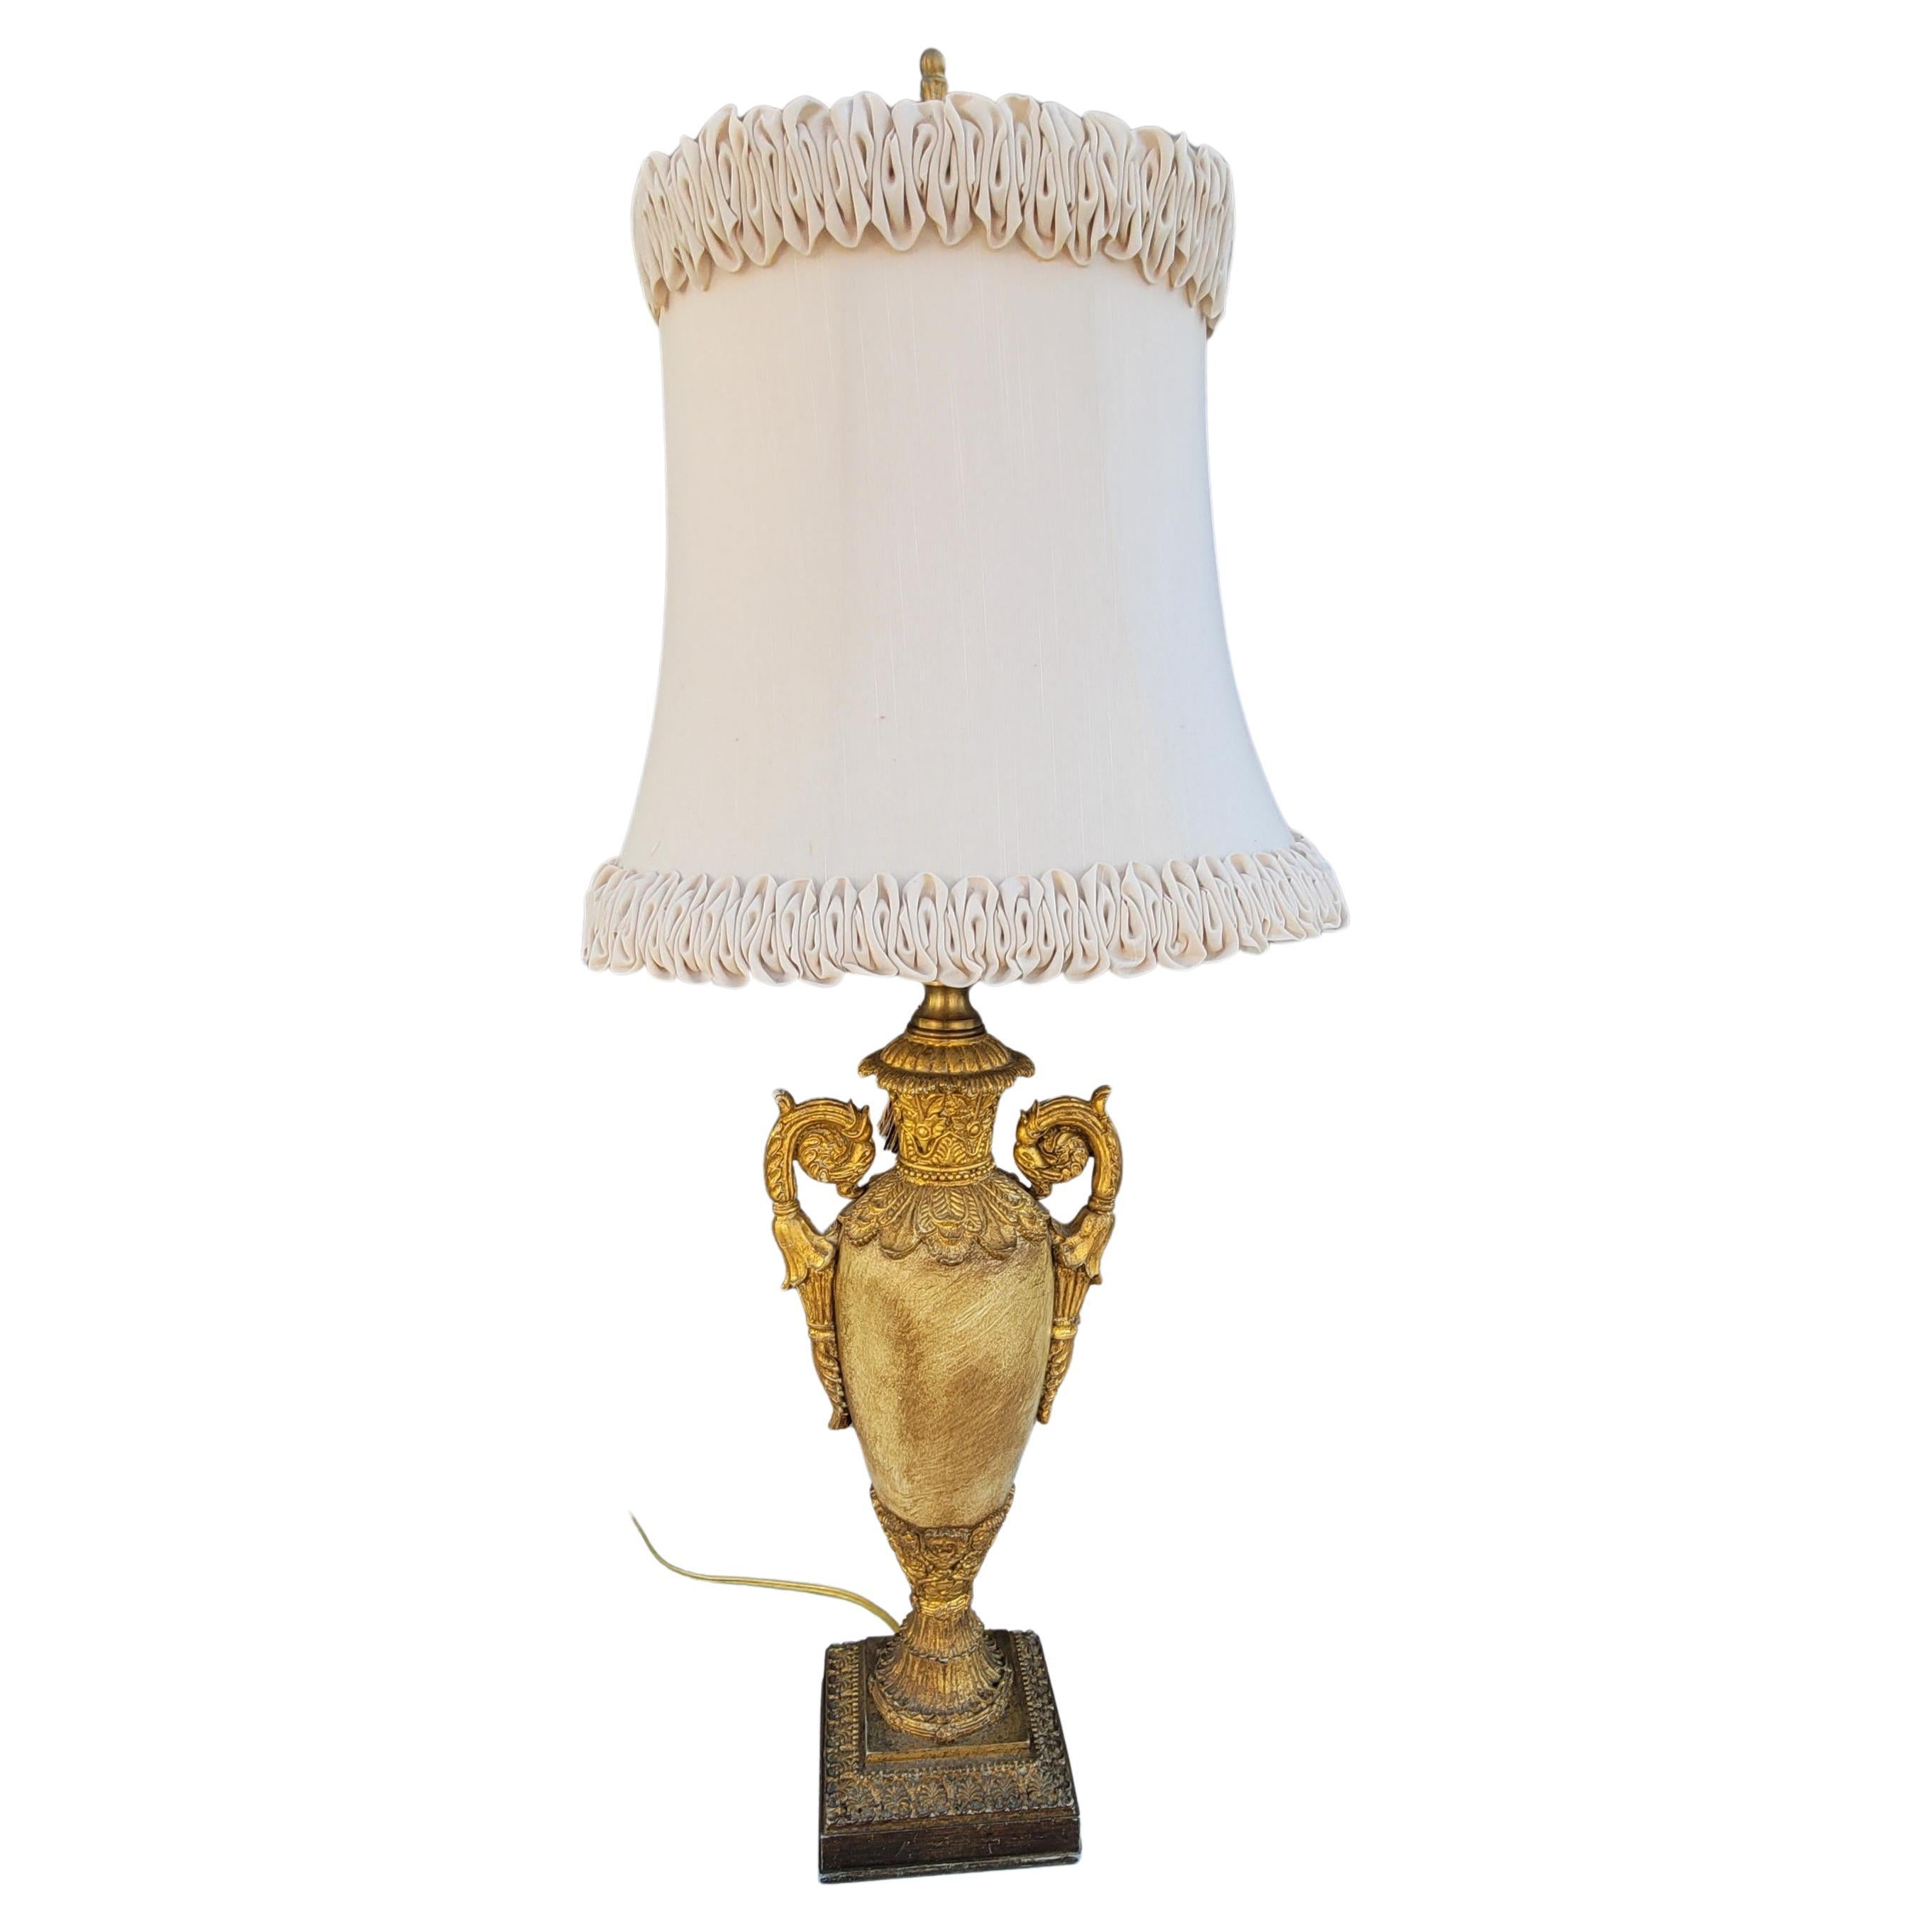 John Richard Antiqued Gilt Ornate Plaster Trophy Table Lamp w/ Original Shade